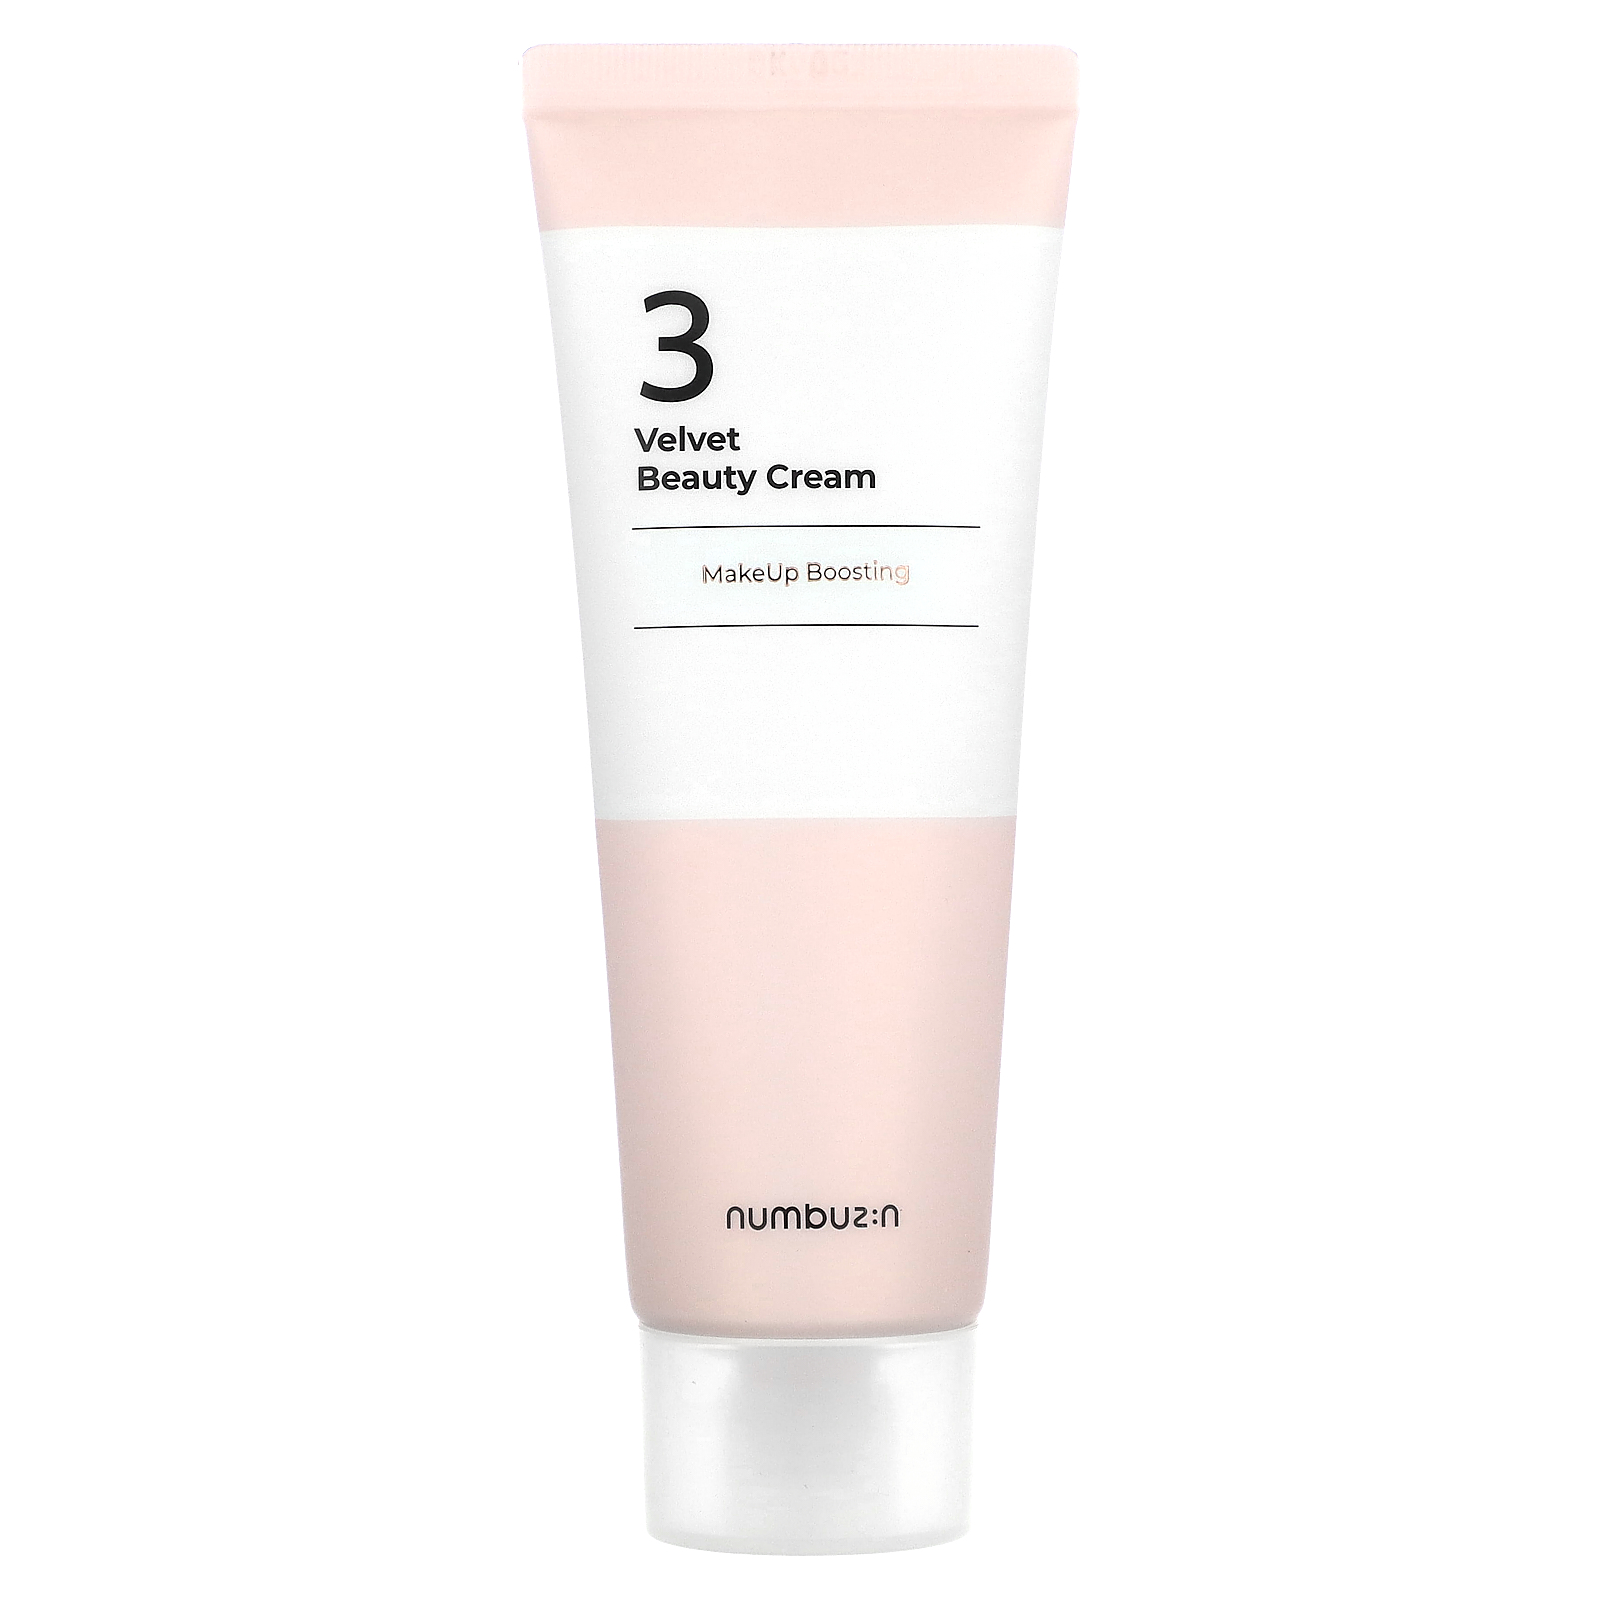 Numbuzin Velvet Beauty Cream, Makeup Boosting, No. 3, 2.02 fl oz (60 ml) - image 1 of 2